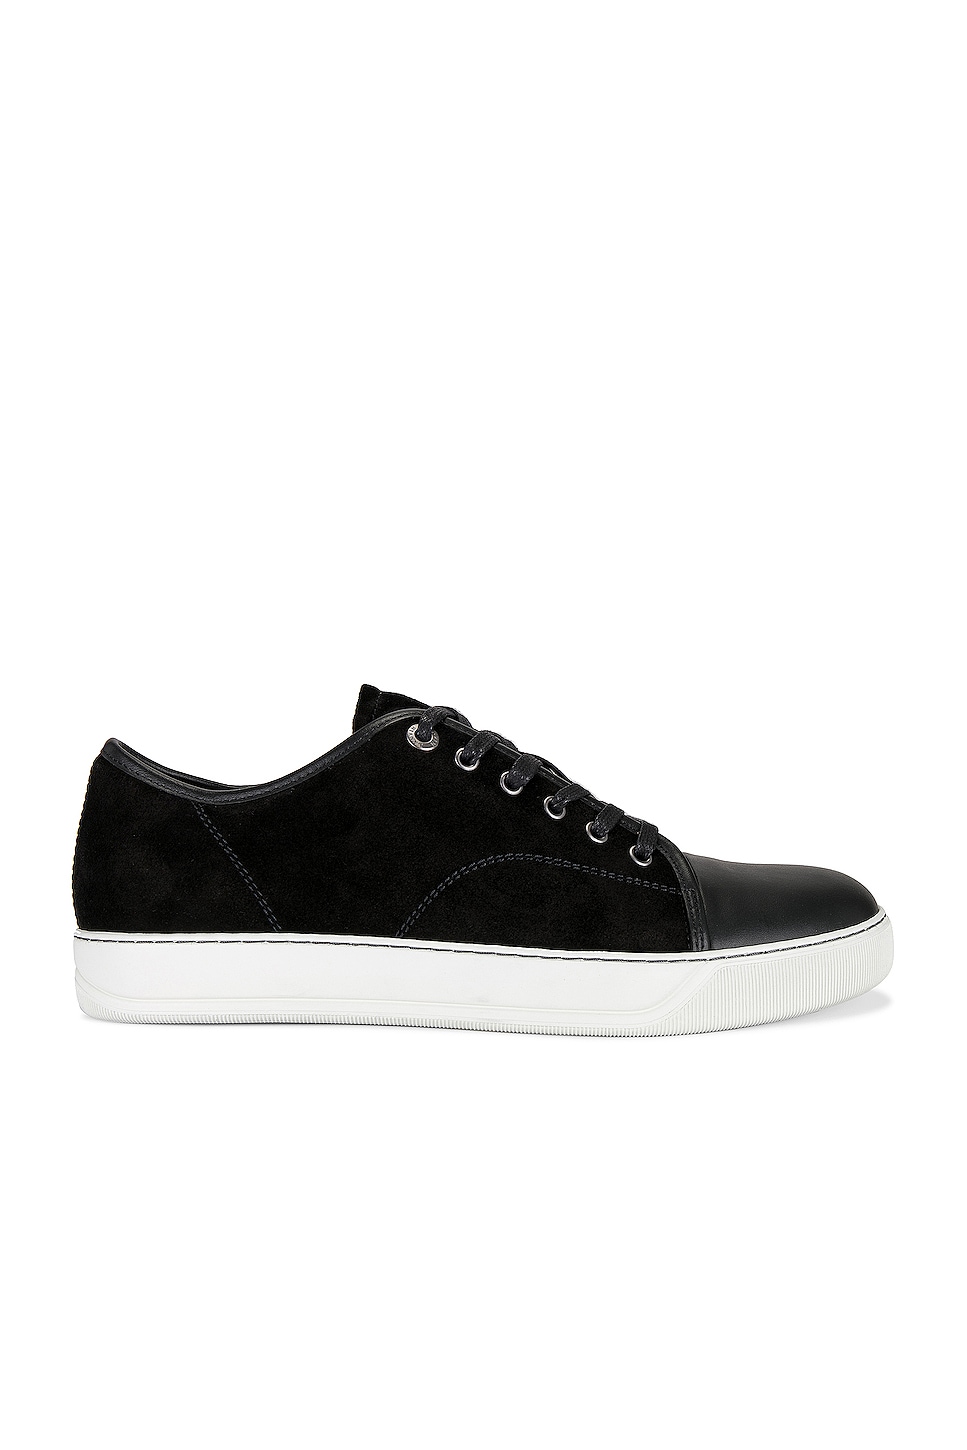 Image 1 of Lanvin Suede And Nappa Captoe Low Top Sneaker in Black